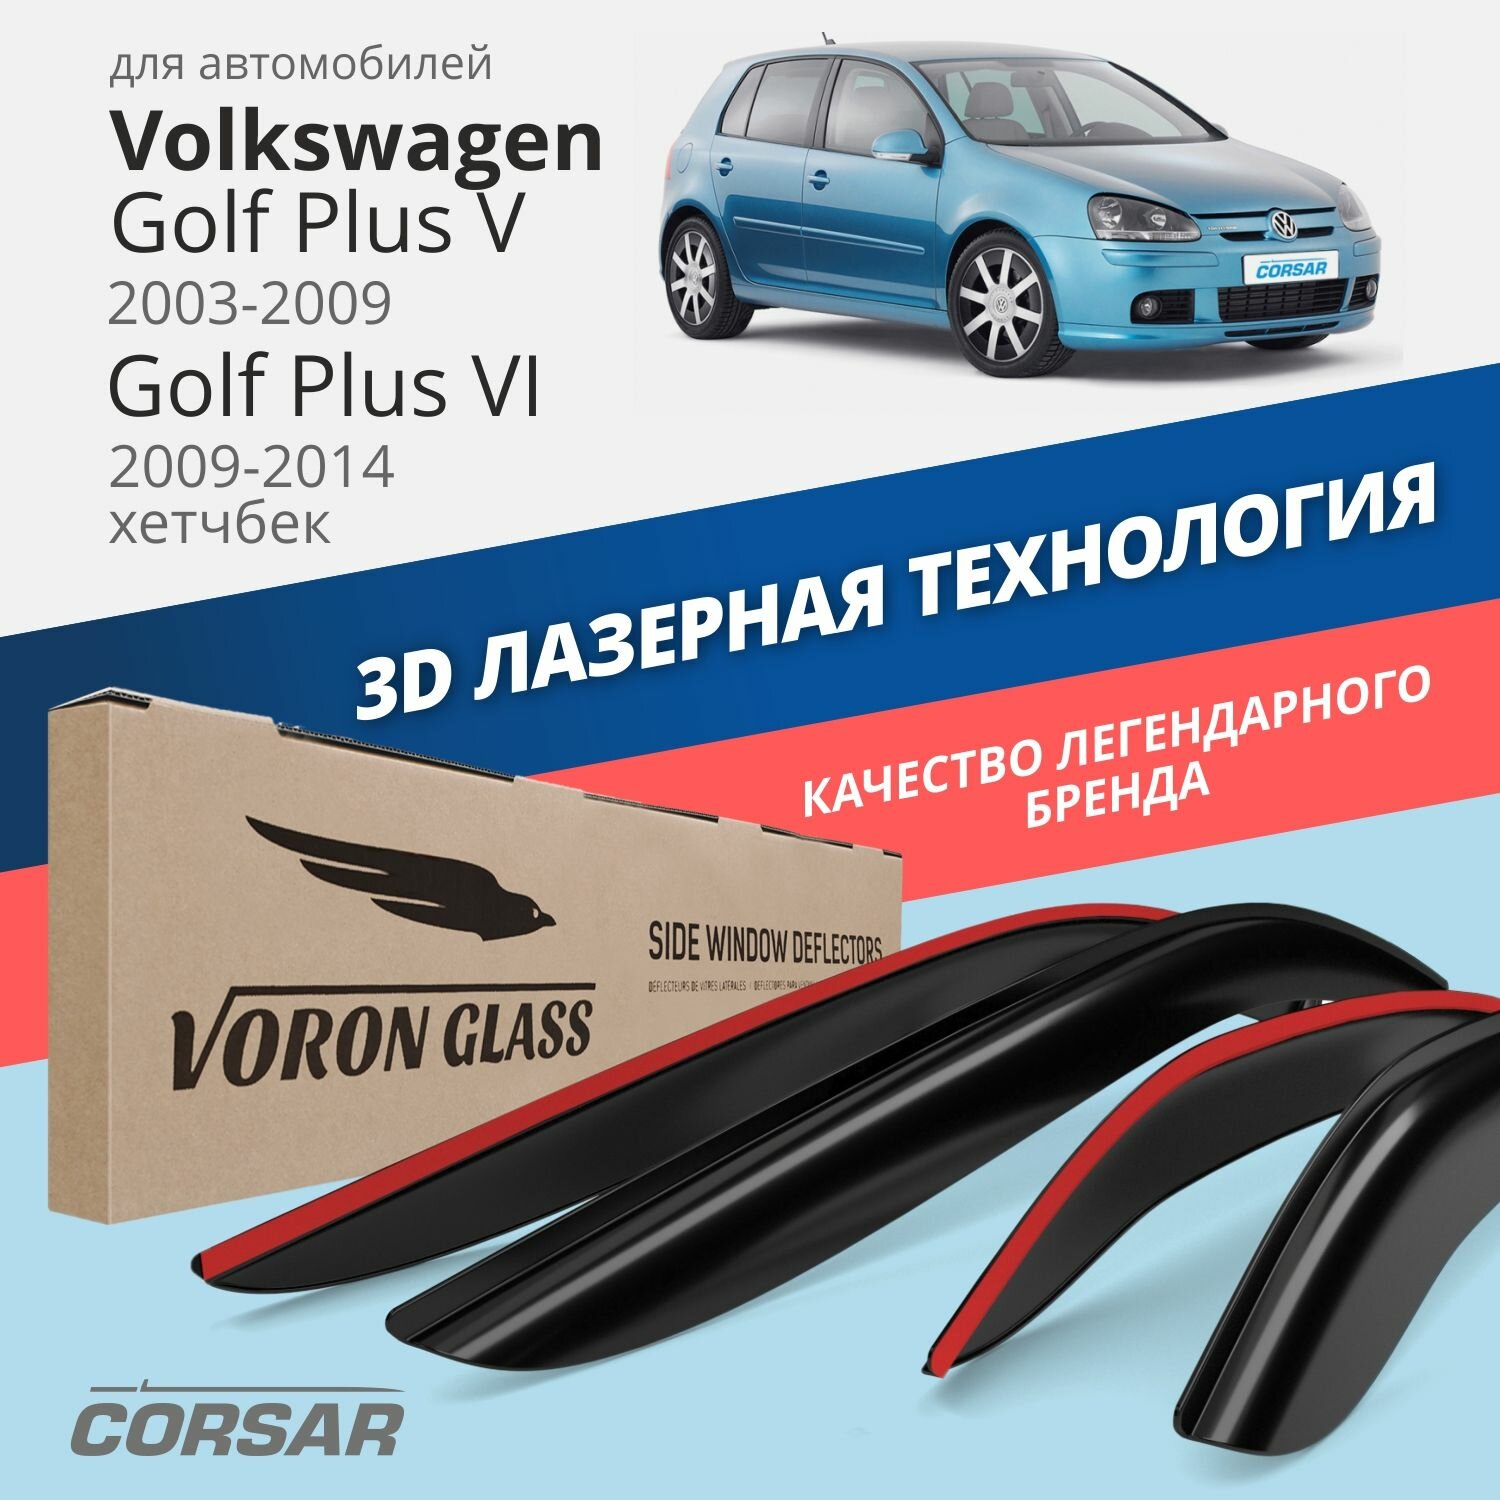 Дефлекторы окон Voron Glass серия Corsar для Volkswagen Golf Plus V 2003-2009 / Golf Plus VI 2009-2014 накладные 4 шт.